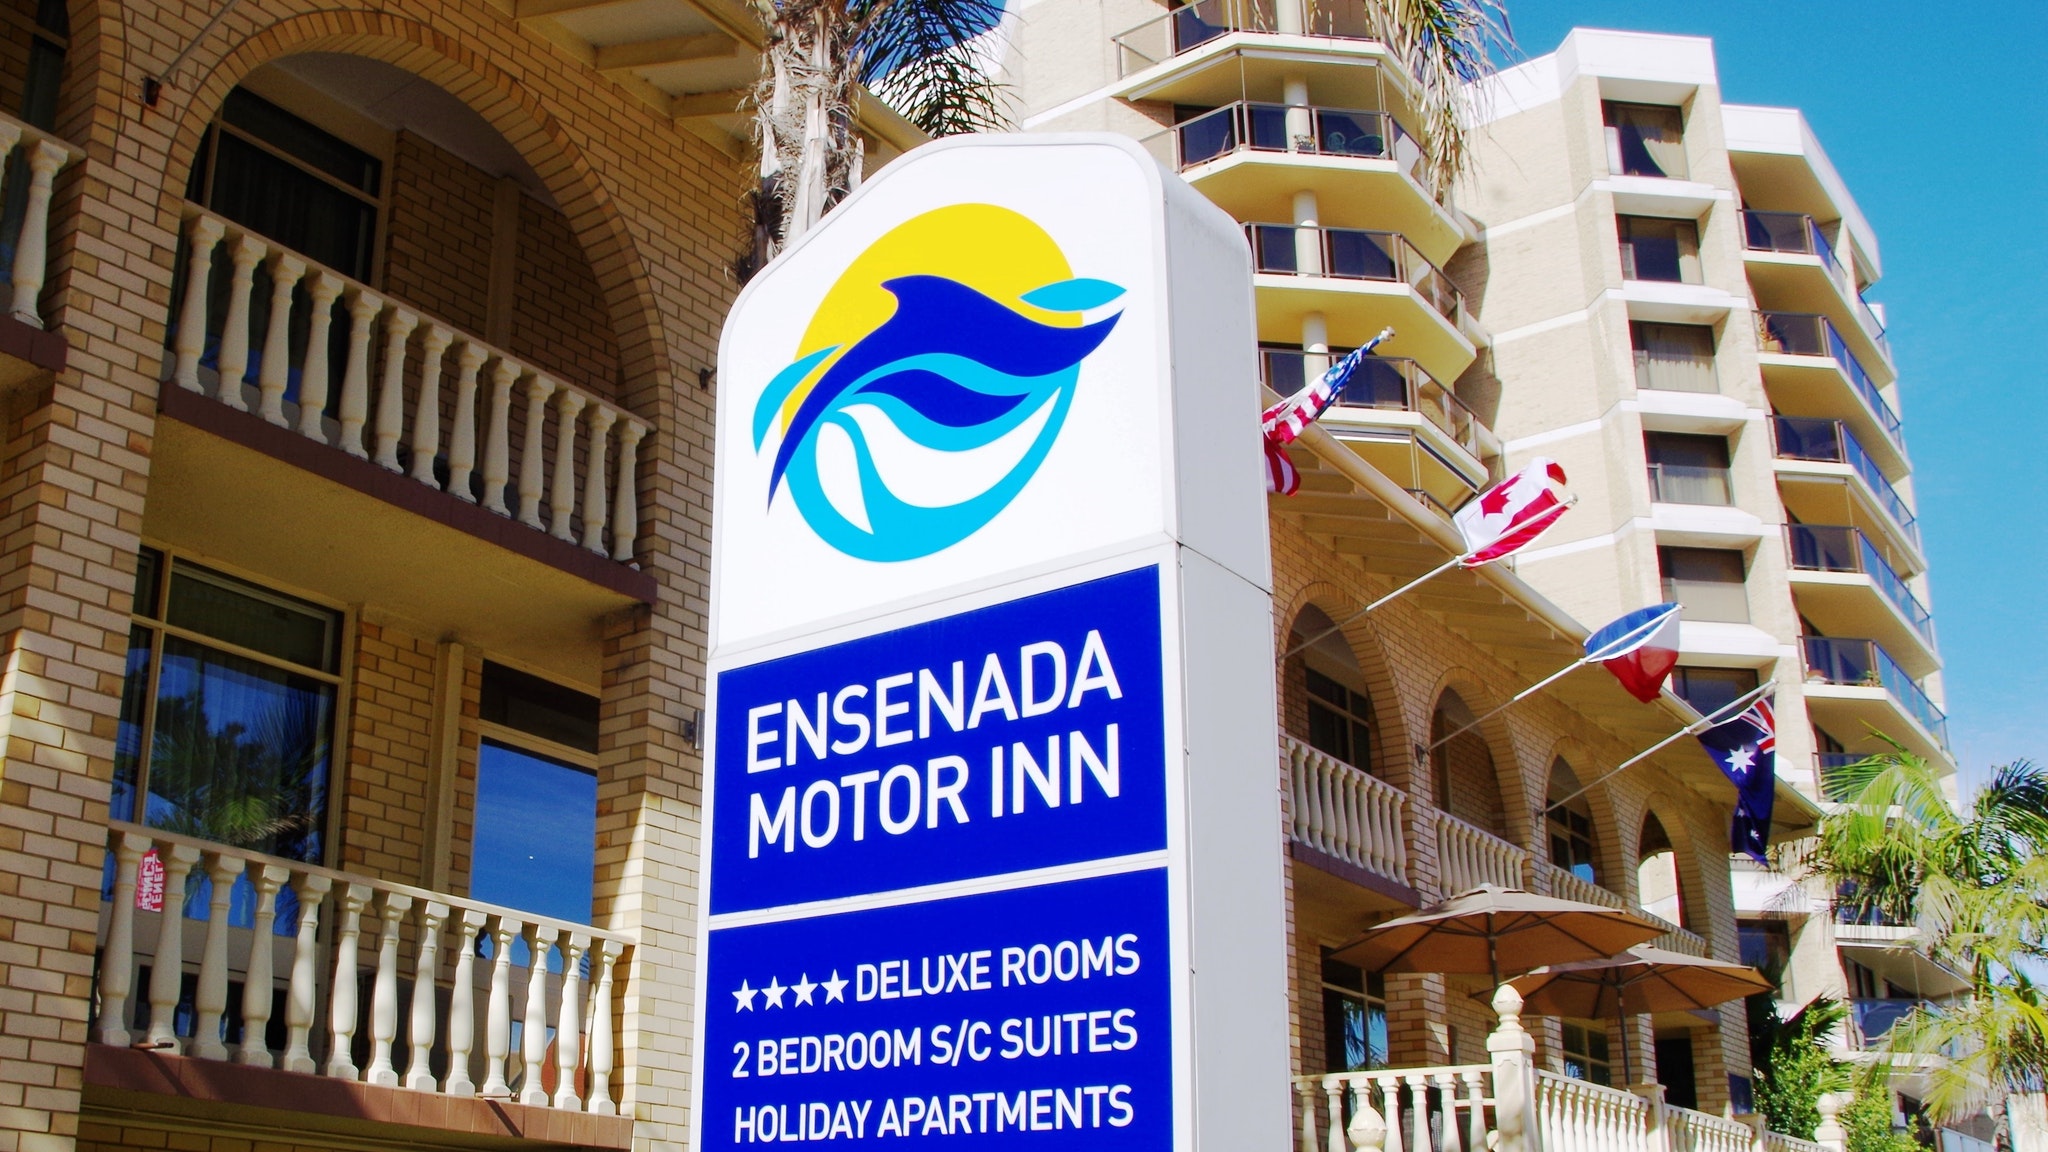 Ensenada Motor Inn And Suites - Nambucca Heads Accommodation 10